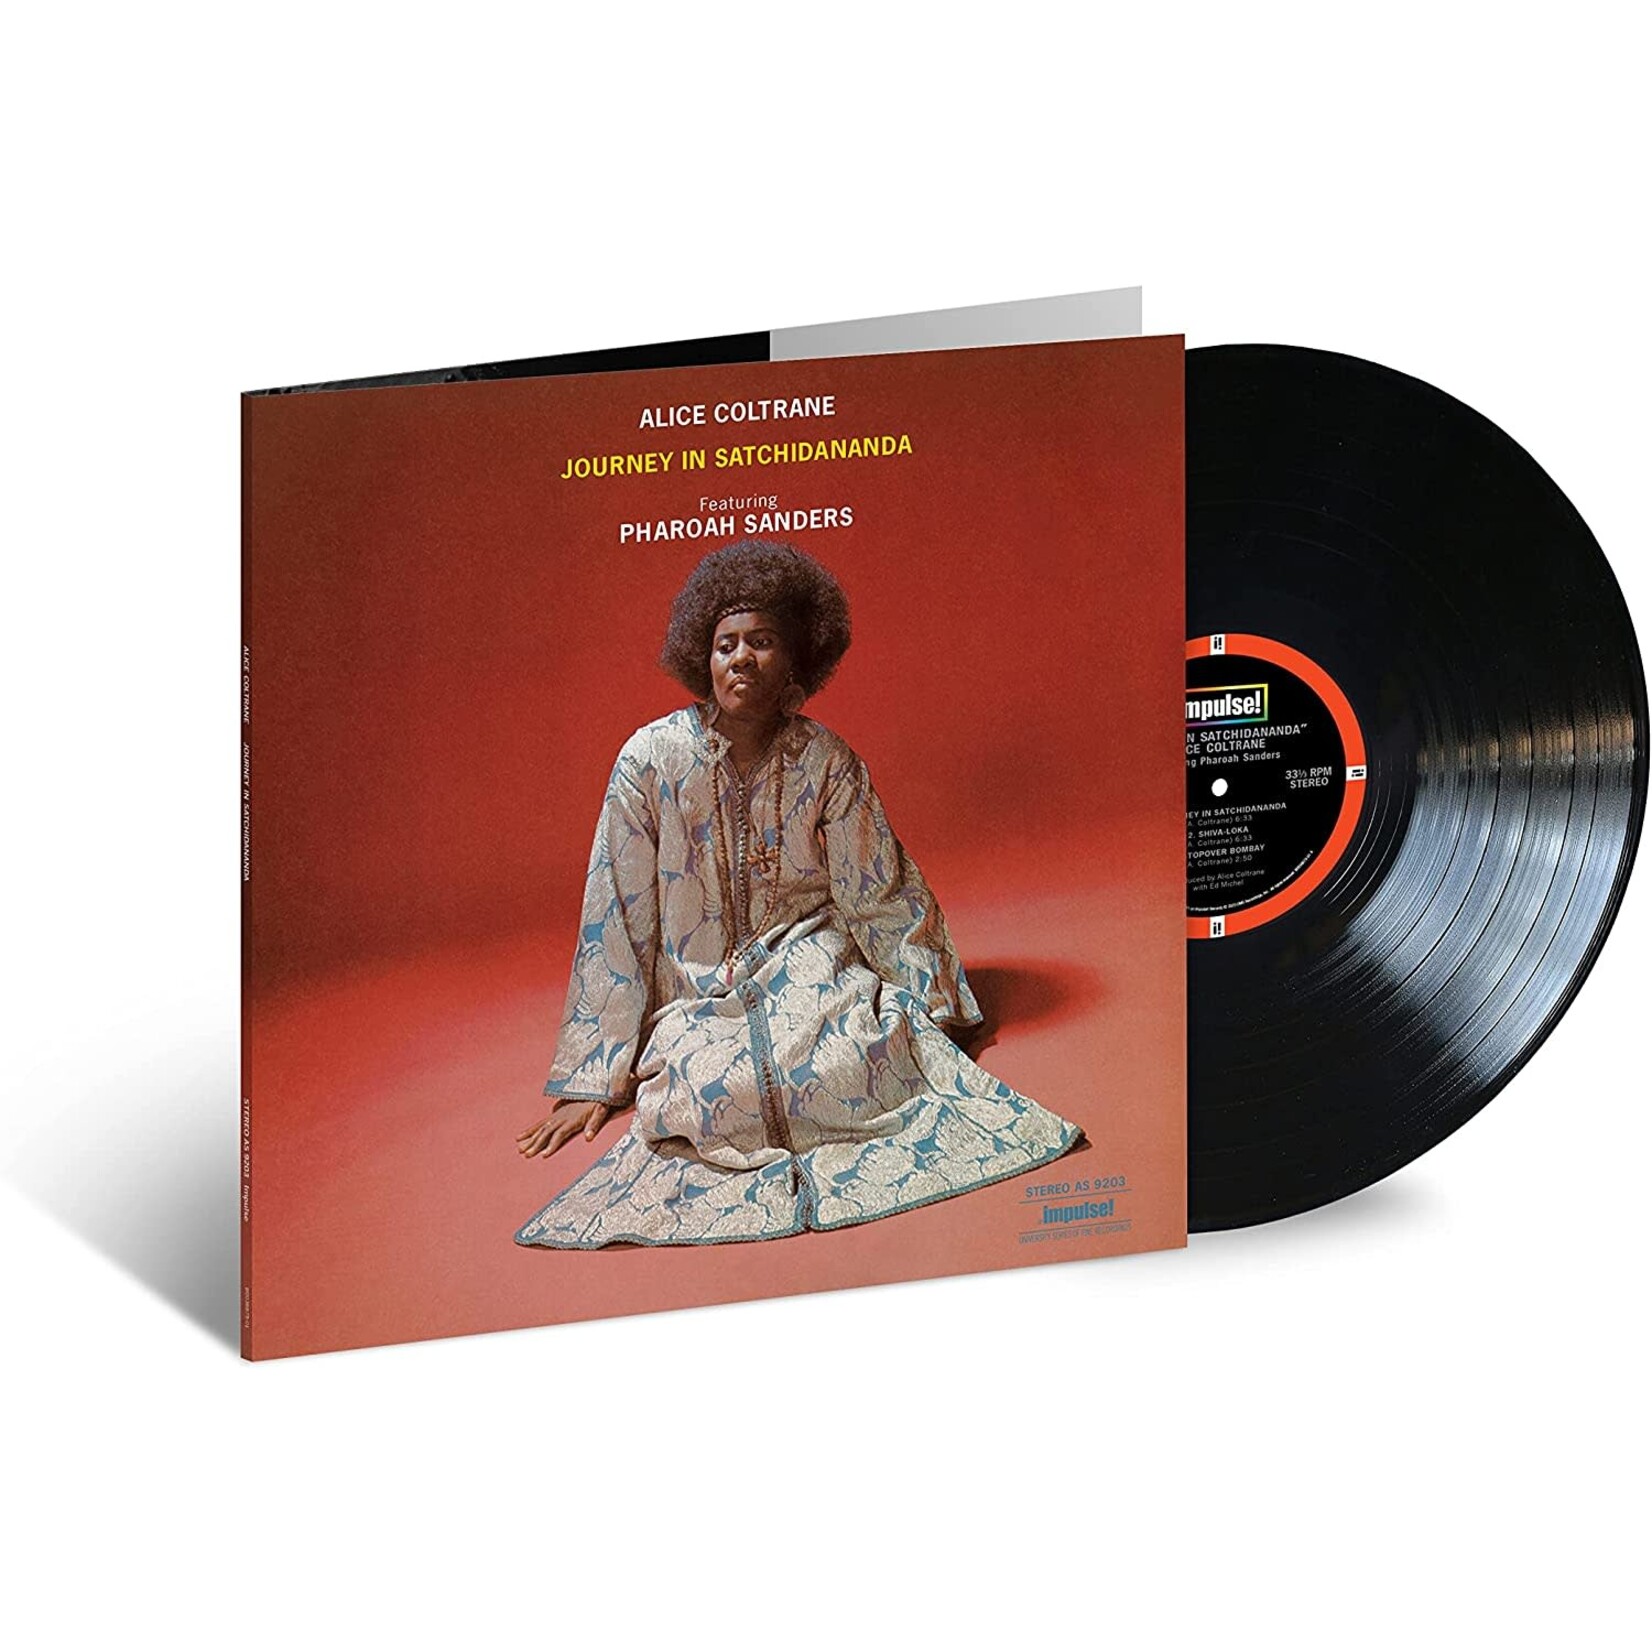 Alice Coltrane - Journey In Satchidananda (Acoustic Sounds Series) [LP]